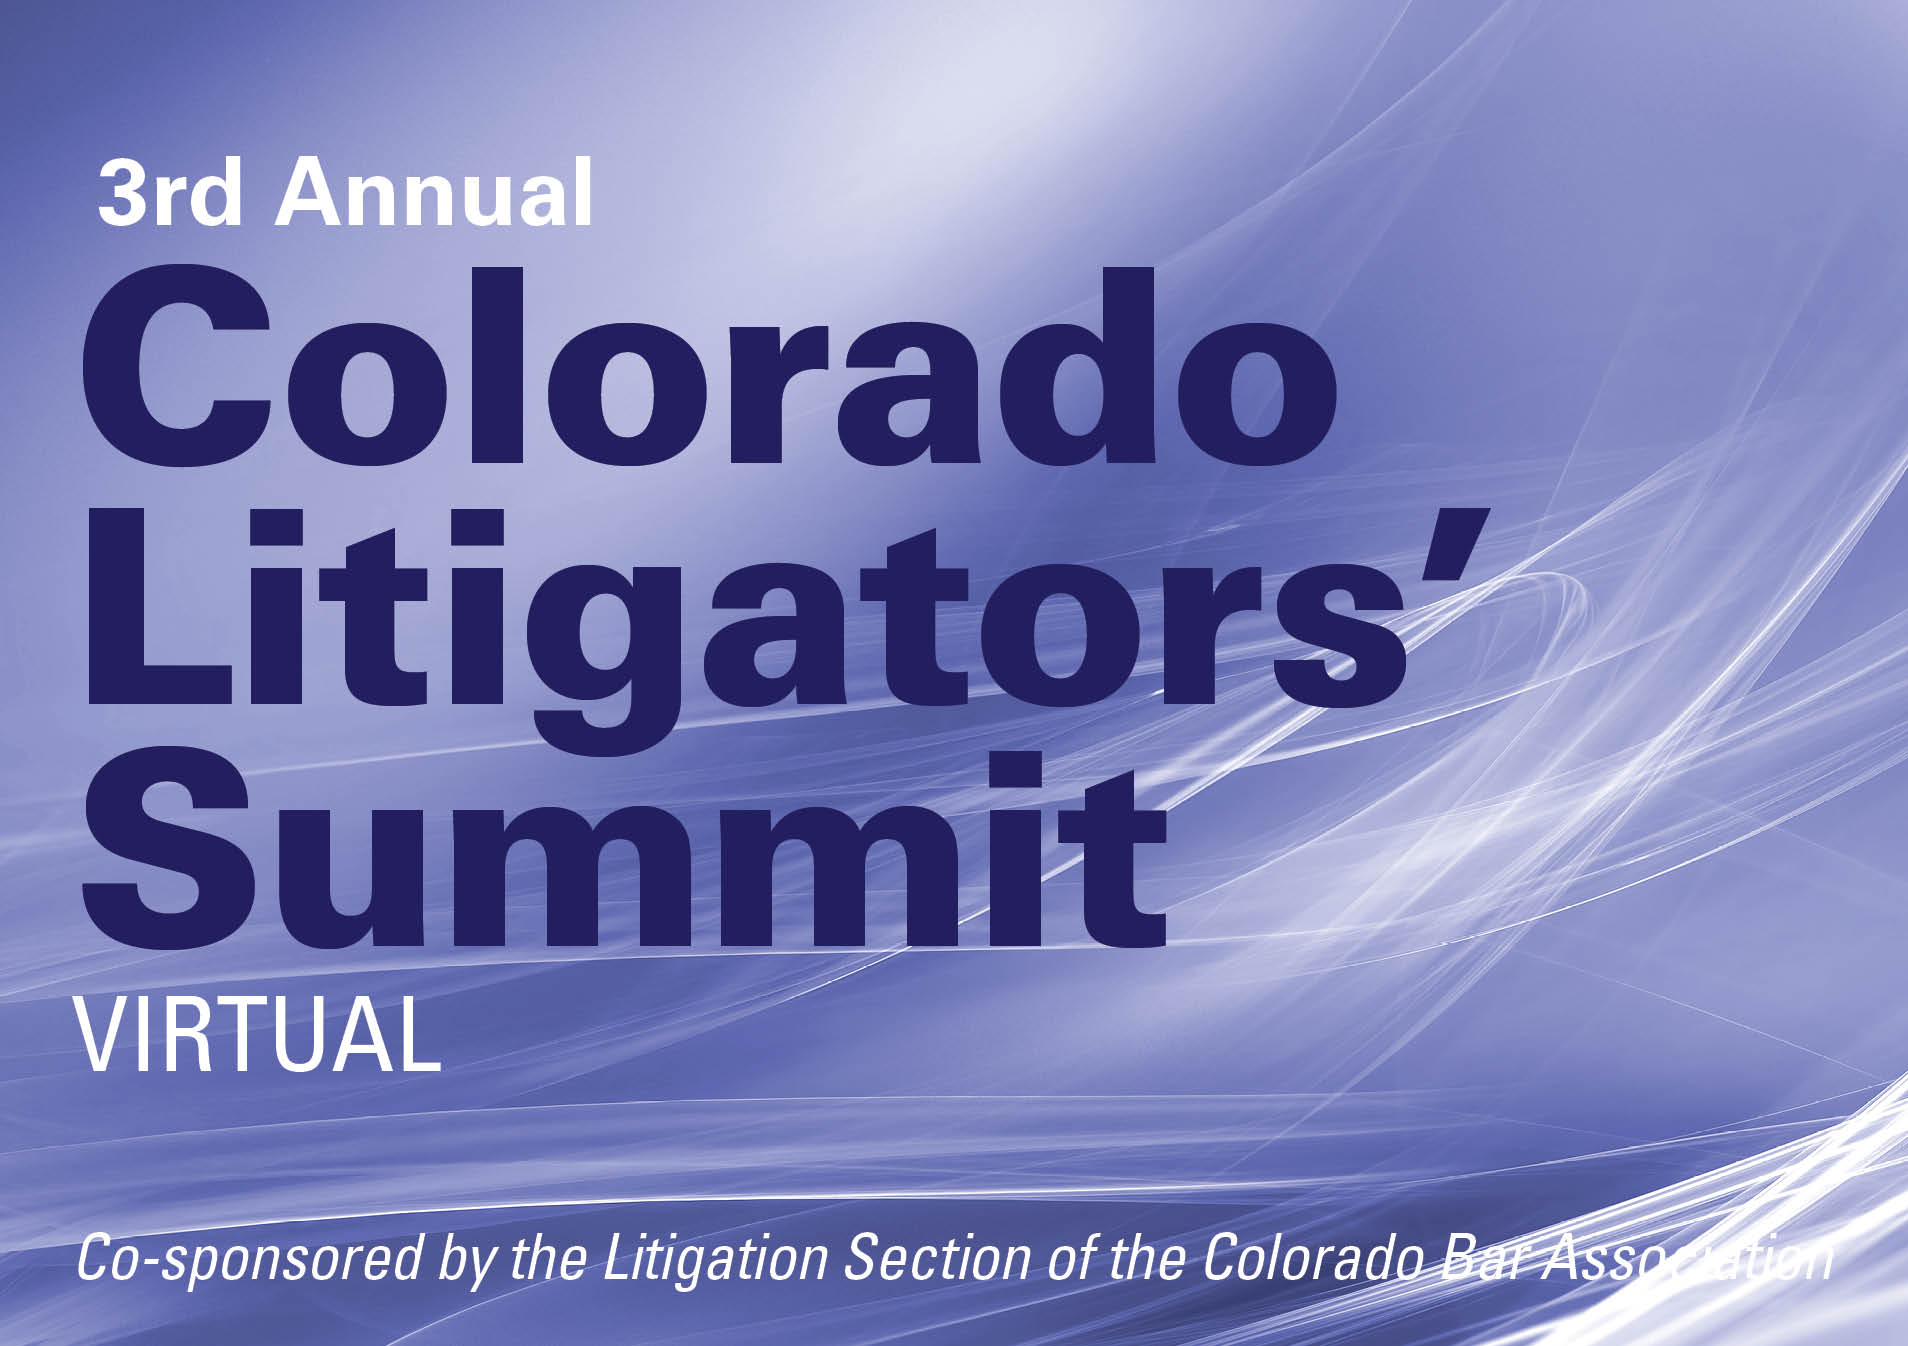 20rd Annual Colorado Litigators Summit CLE